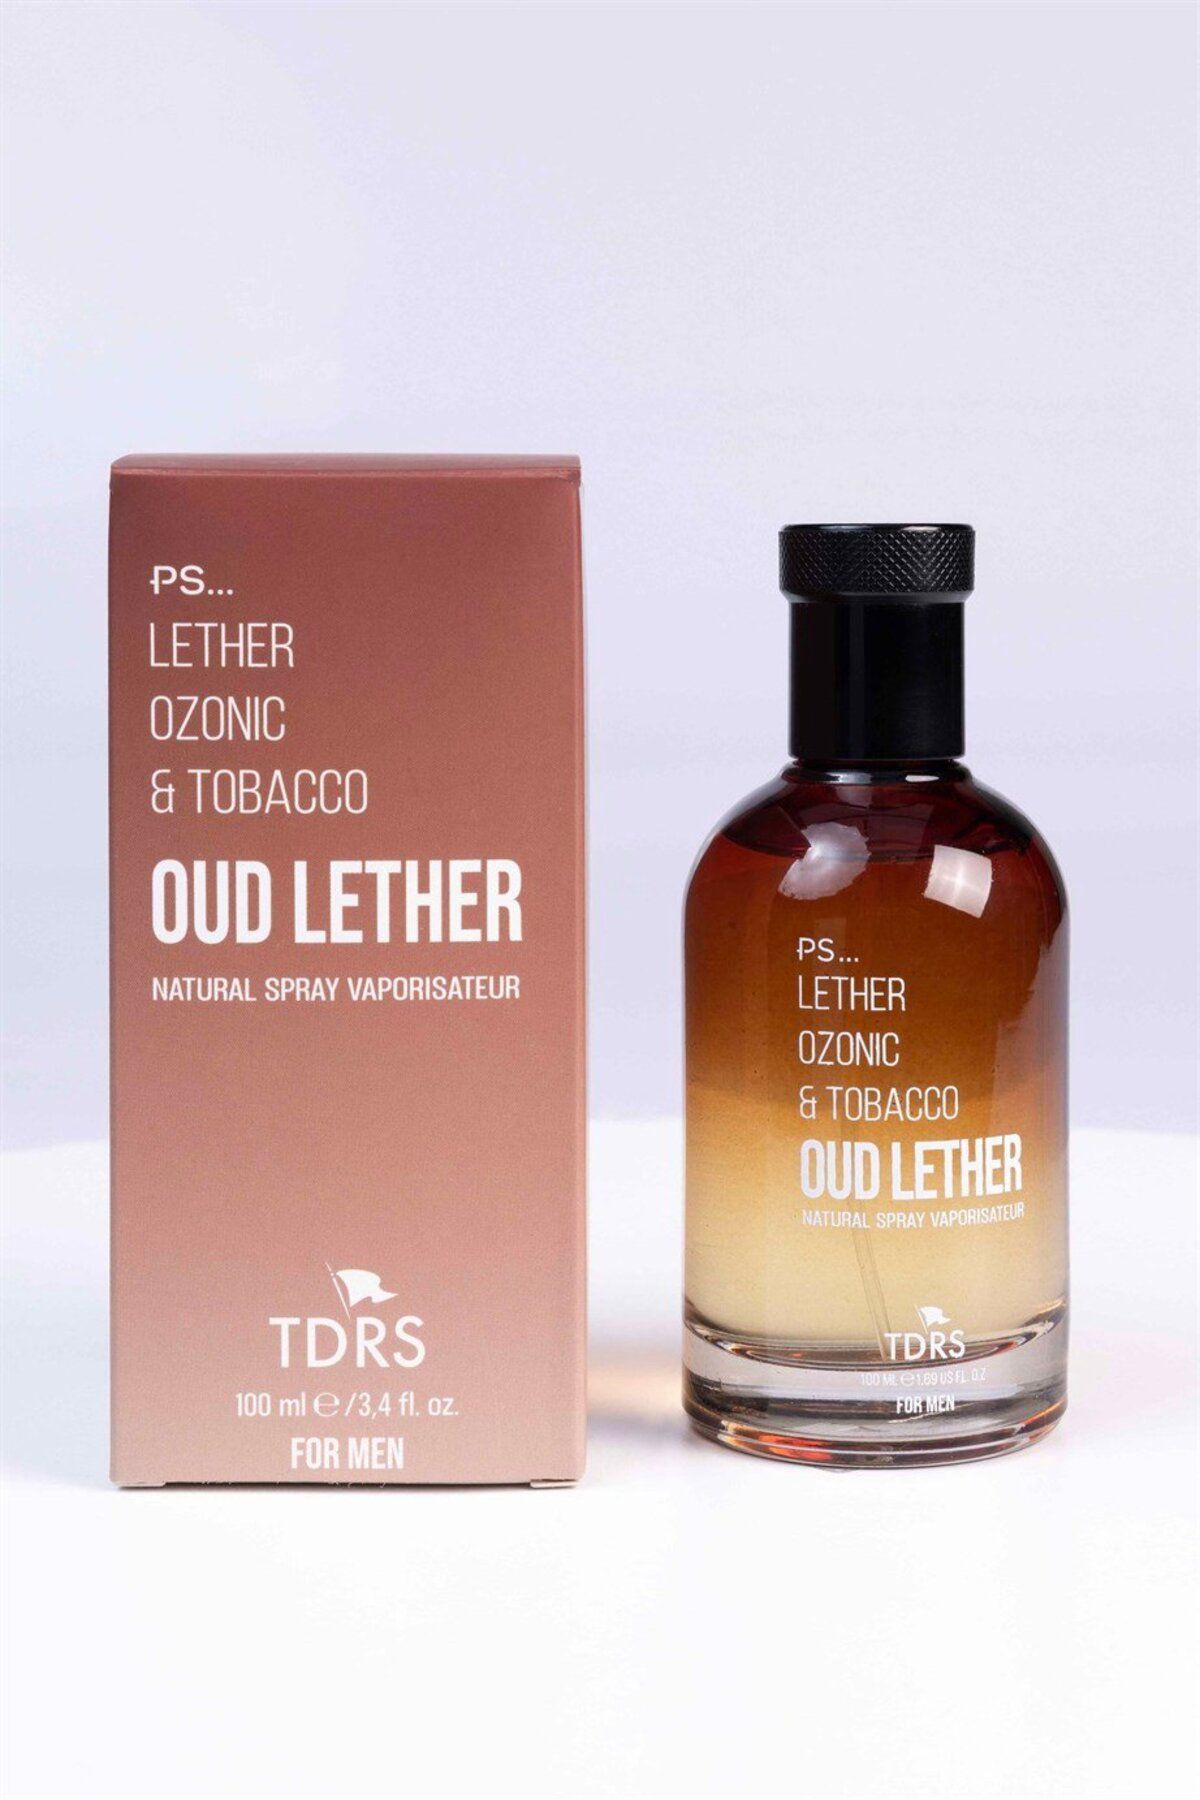 TDRS Out Lether Karanfil Özel Seri Uzun Süre Kalıcı 100 ml Edp Erkek Parfüm